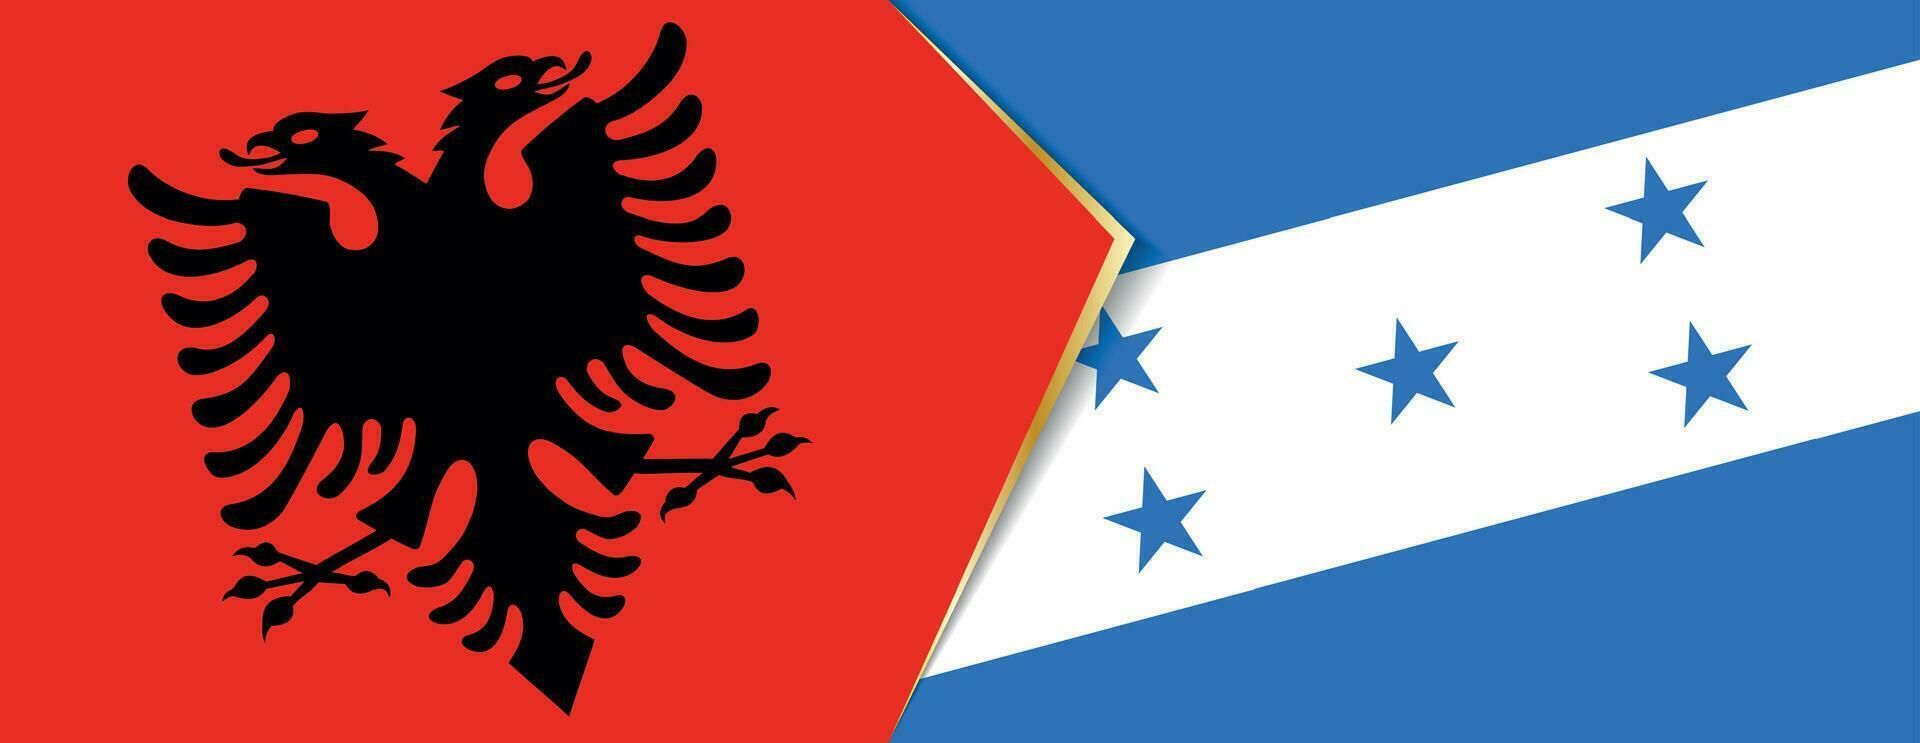 Albania e Honduras bandiere, Due vettore bandiere.